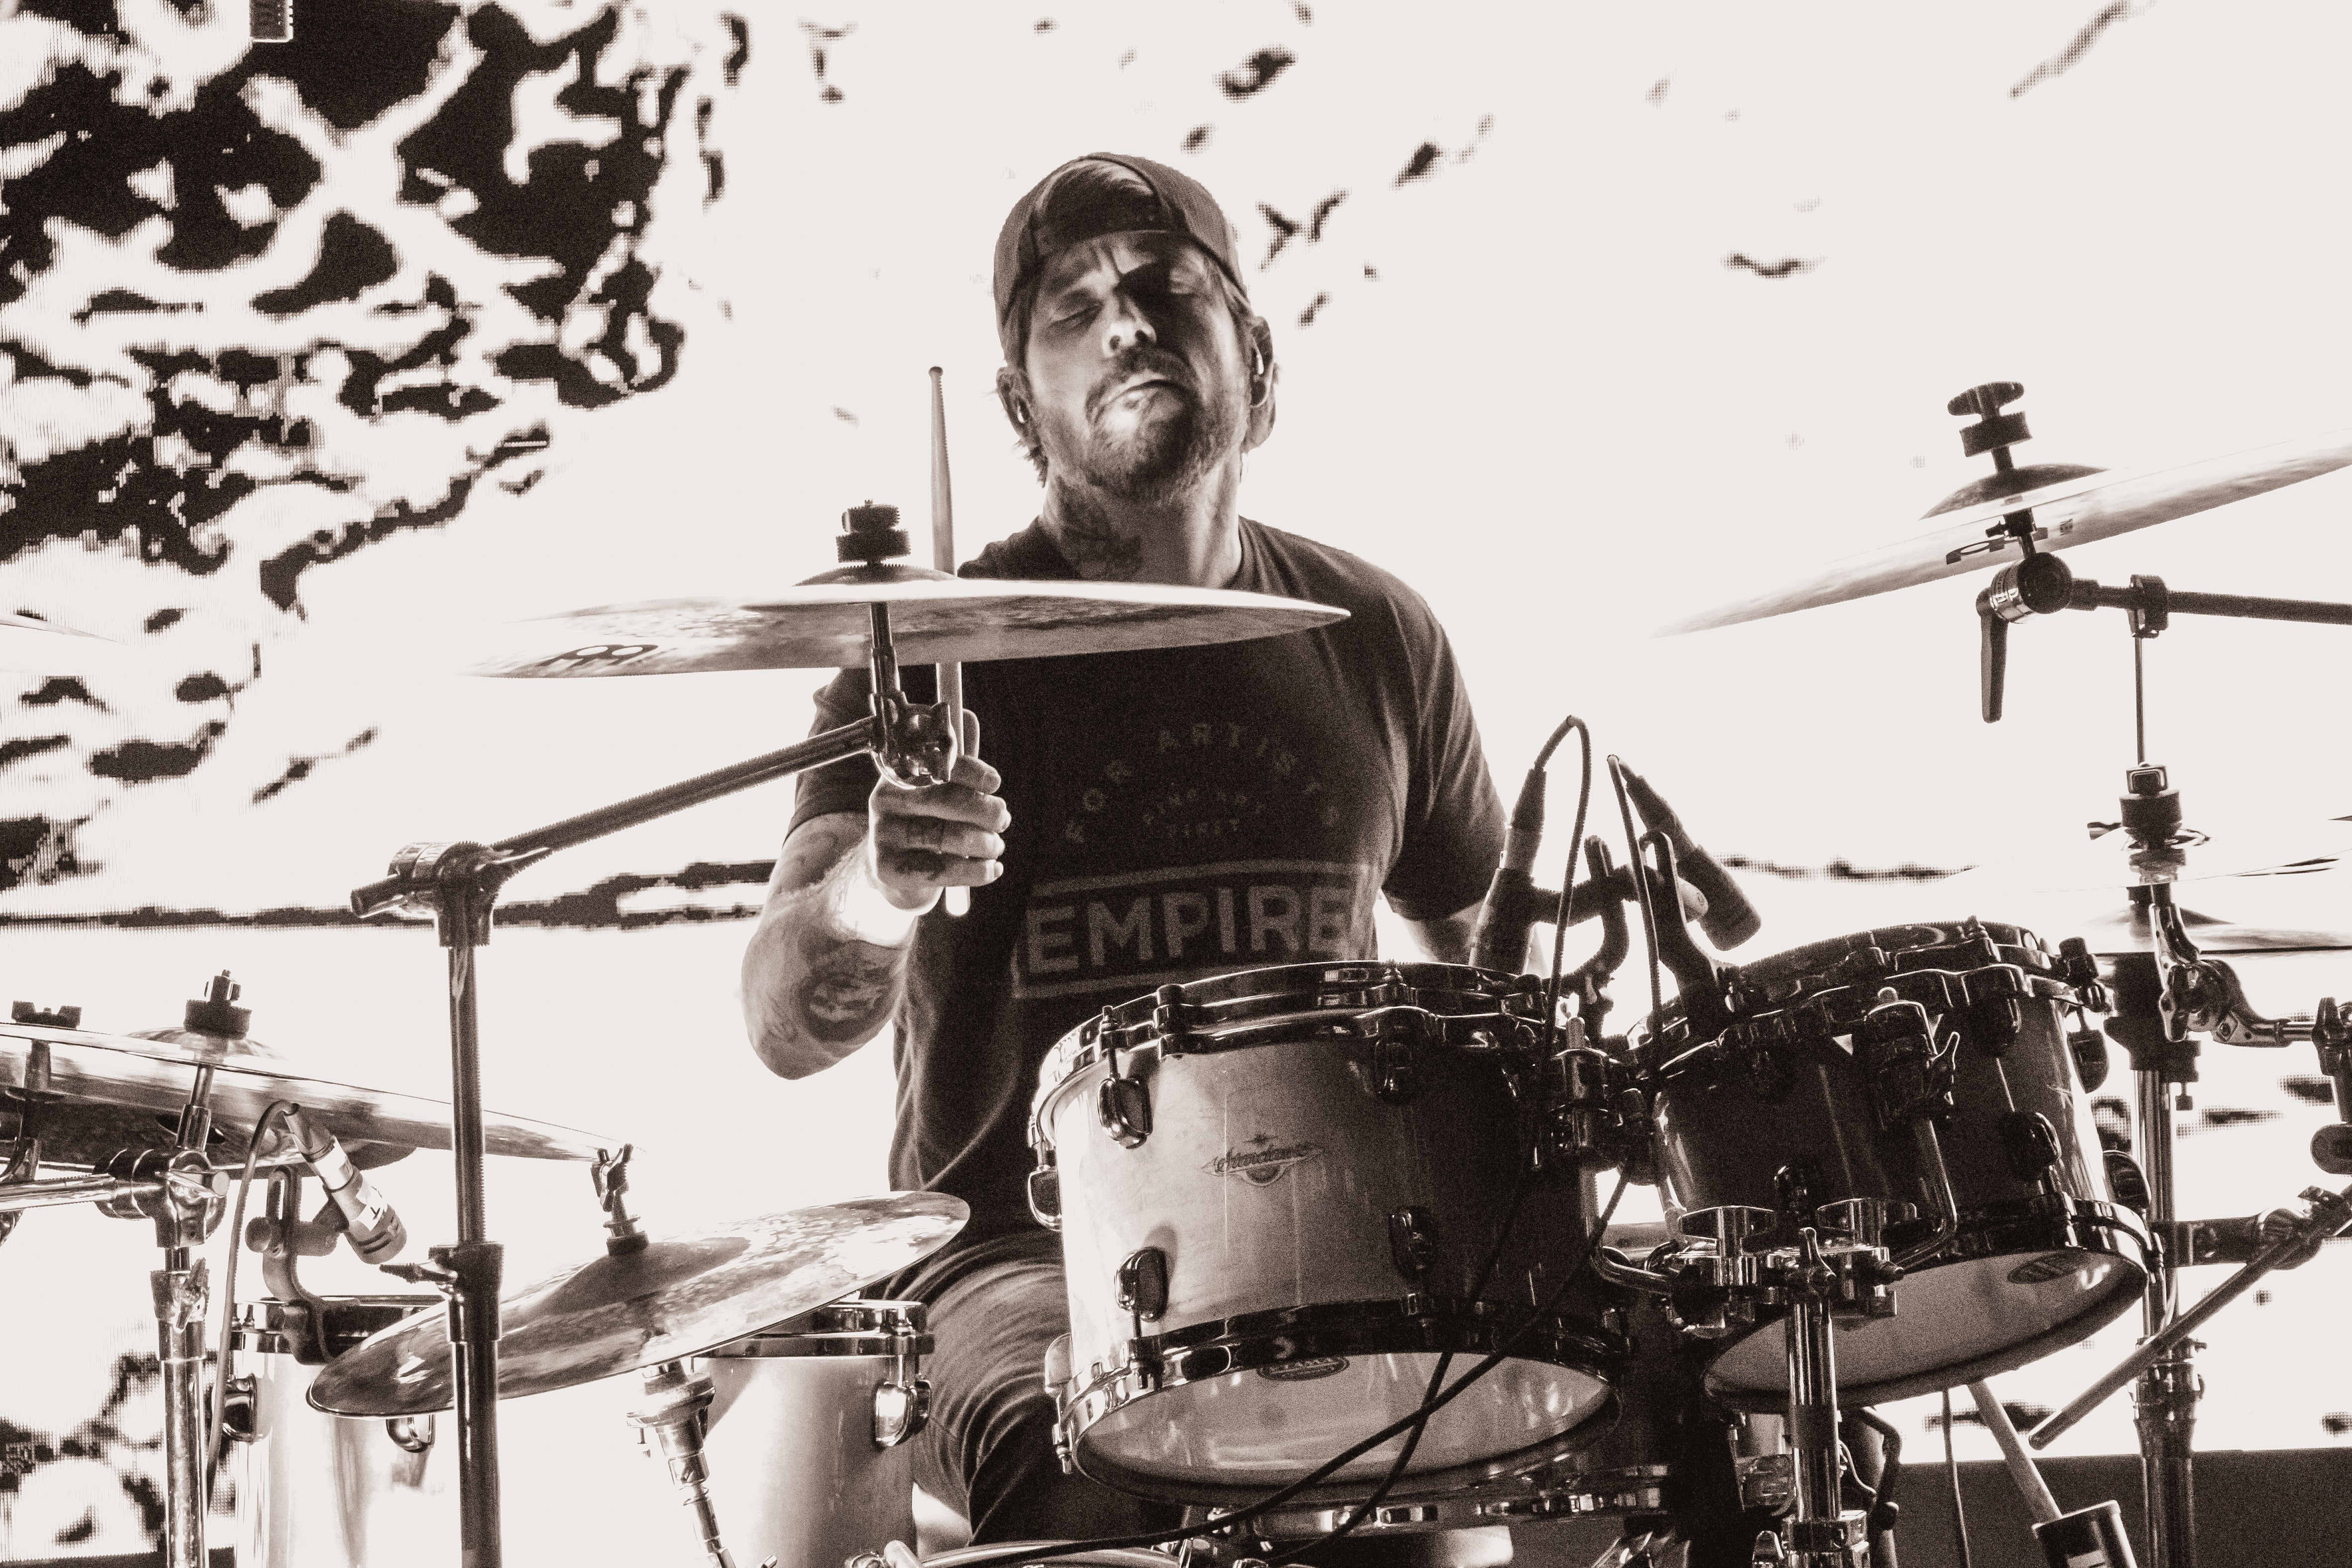 QUOR Drummer Danny Schreiber